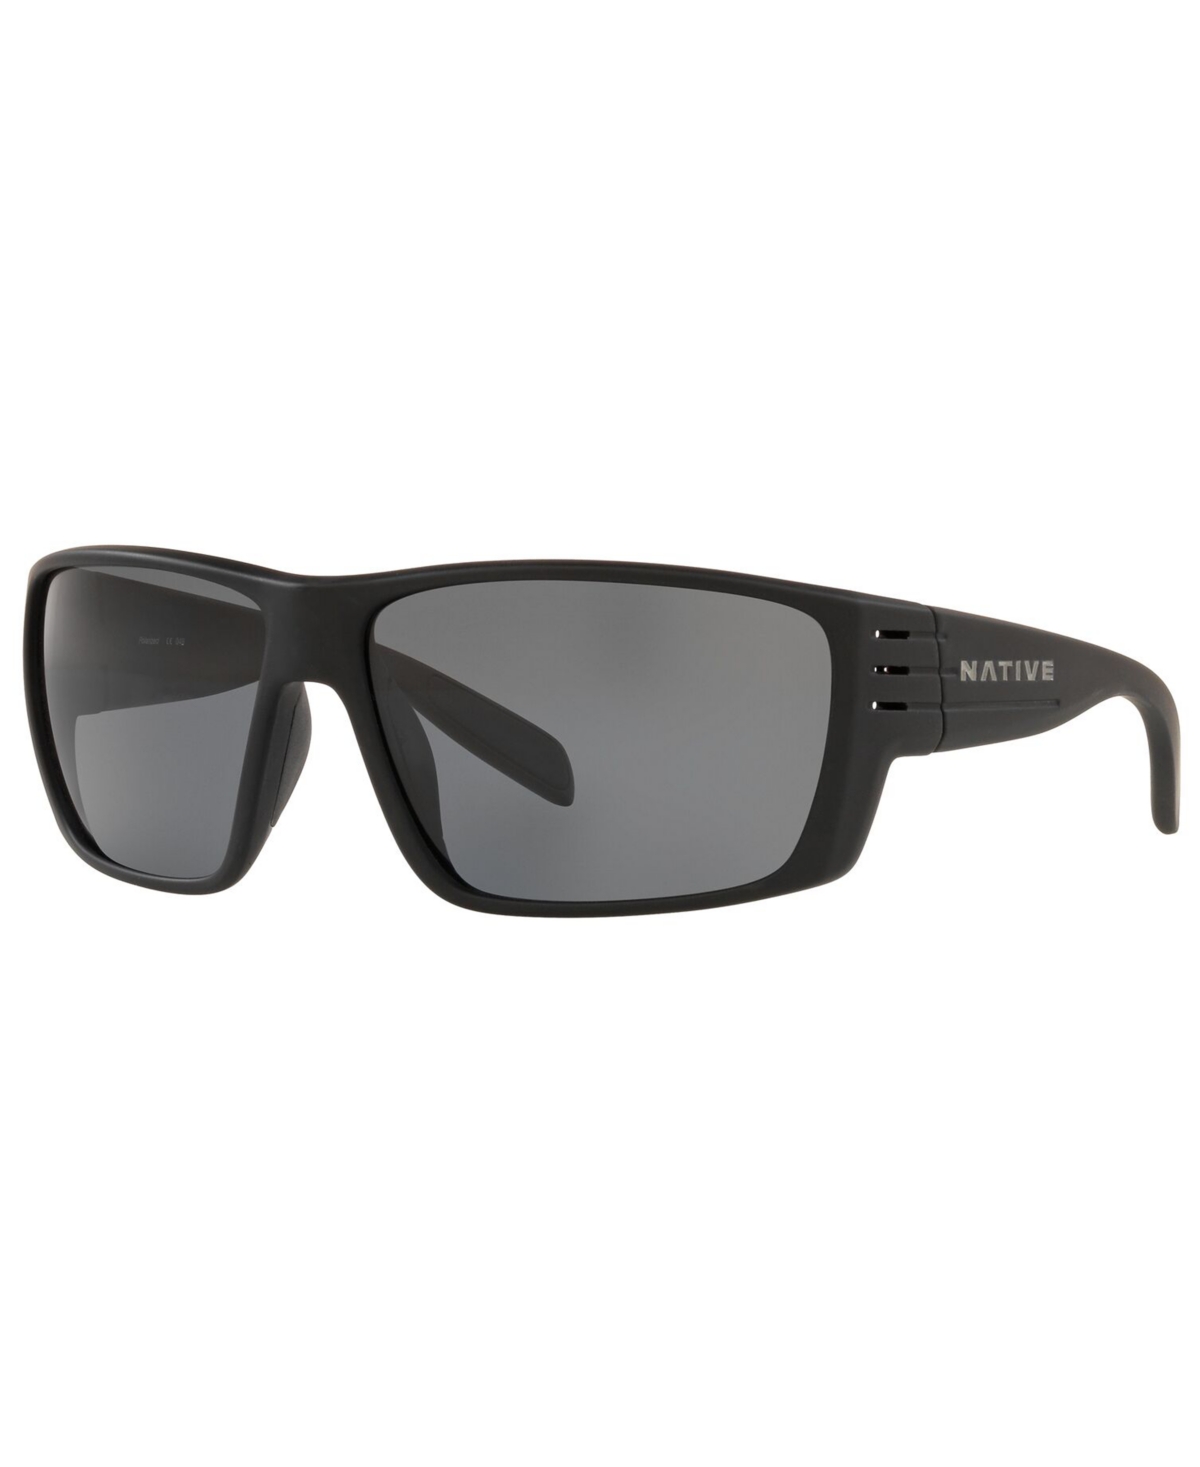 Native Eyewear Native Men's Polarized Sunglasses, Xd9014 66 In Matte Black,grey